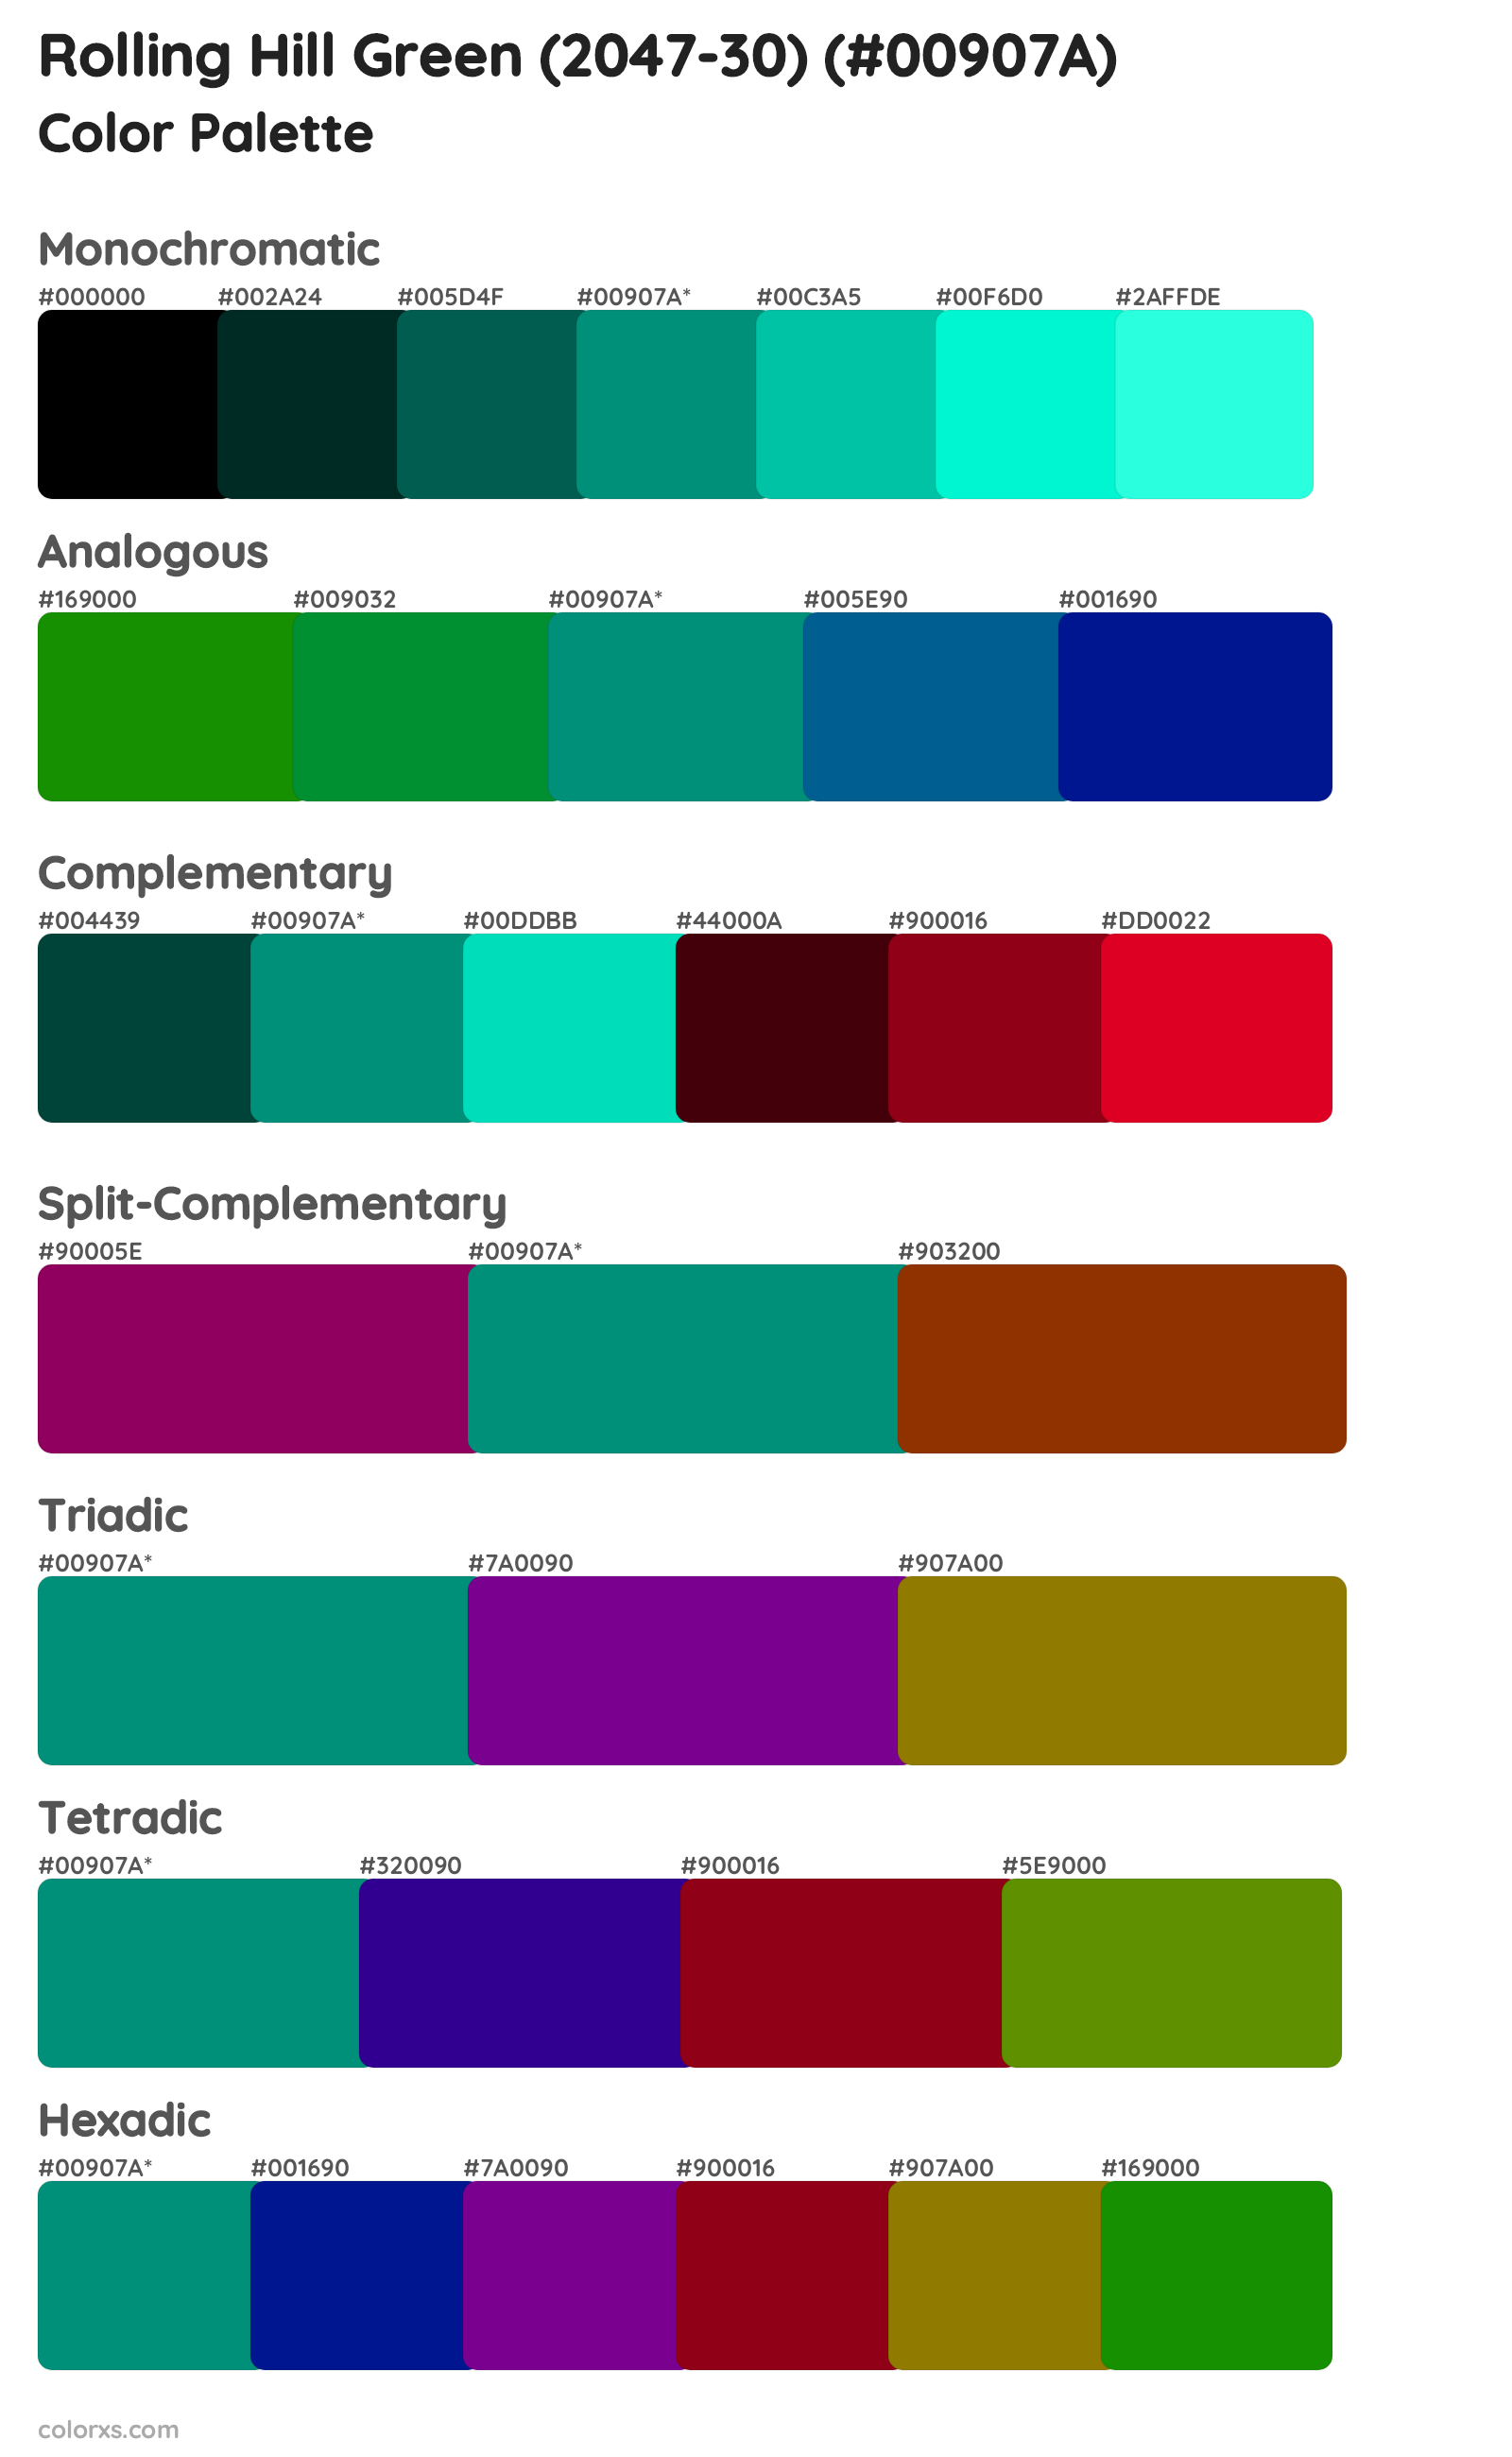 Rolling Hill Green (2047-30) Color Scheme Palettes